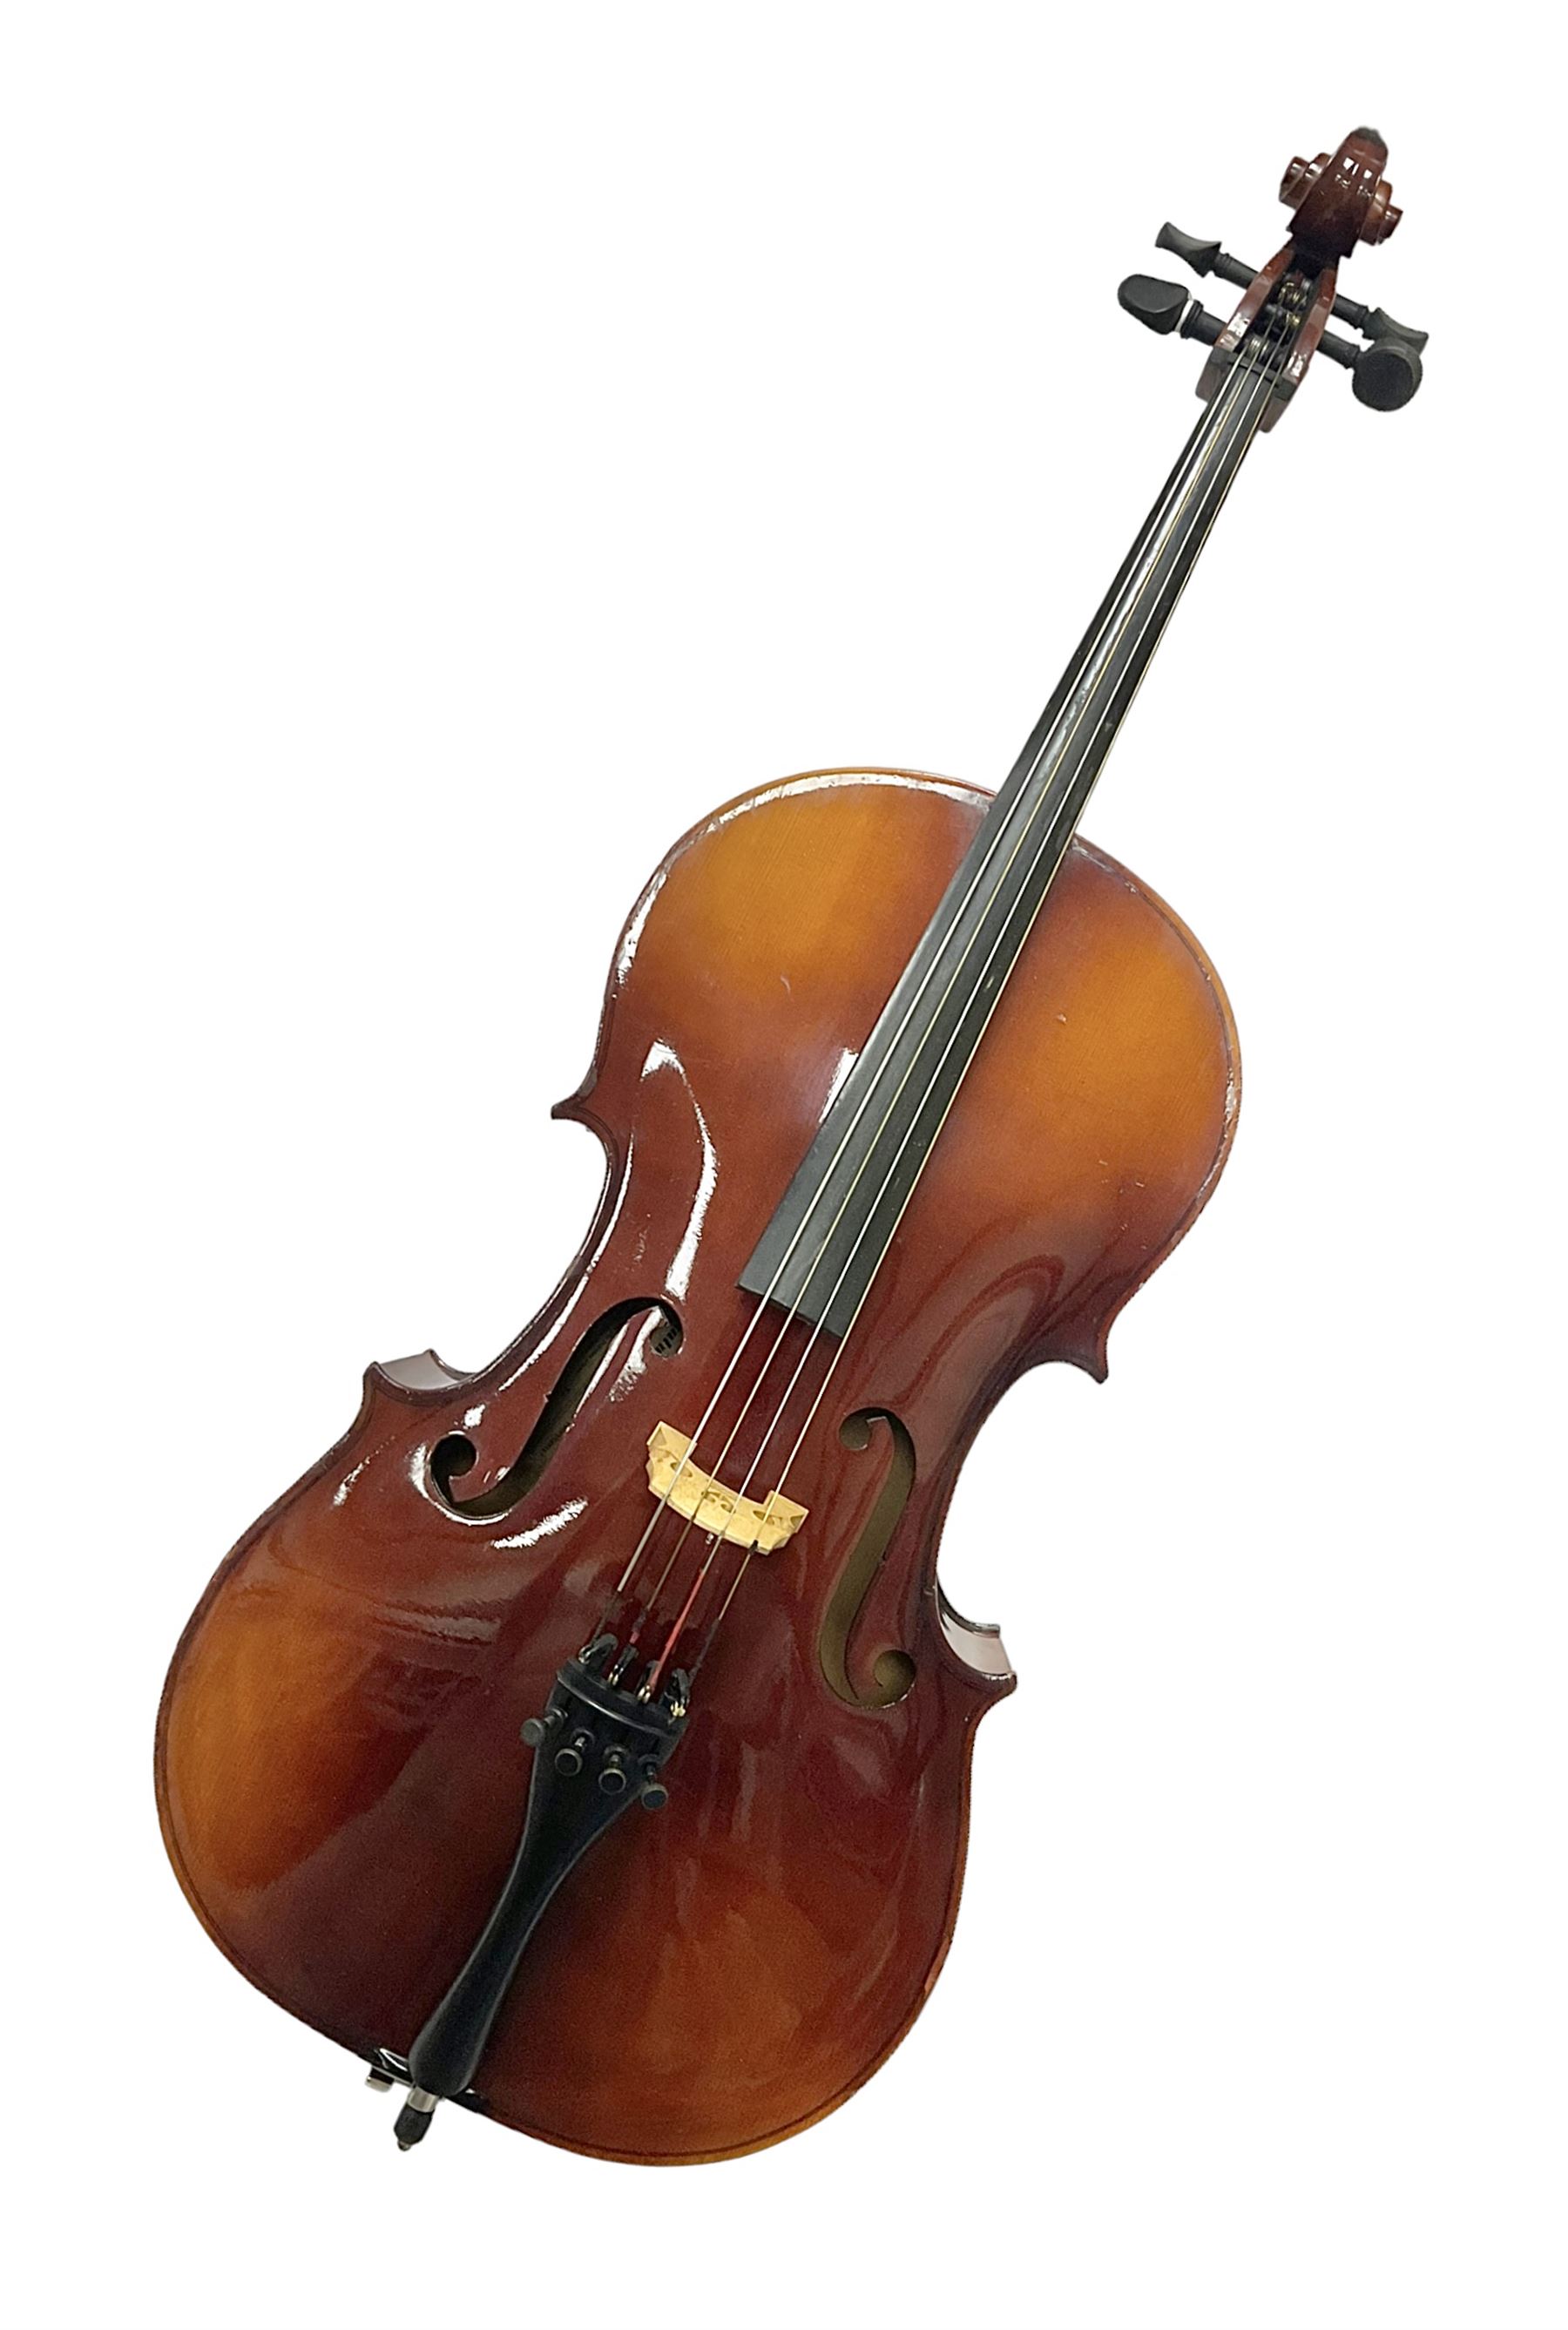 1974 German half size cello